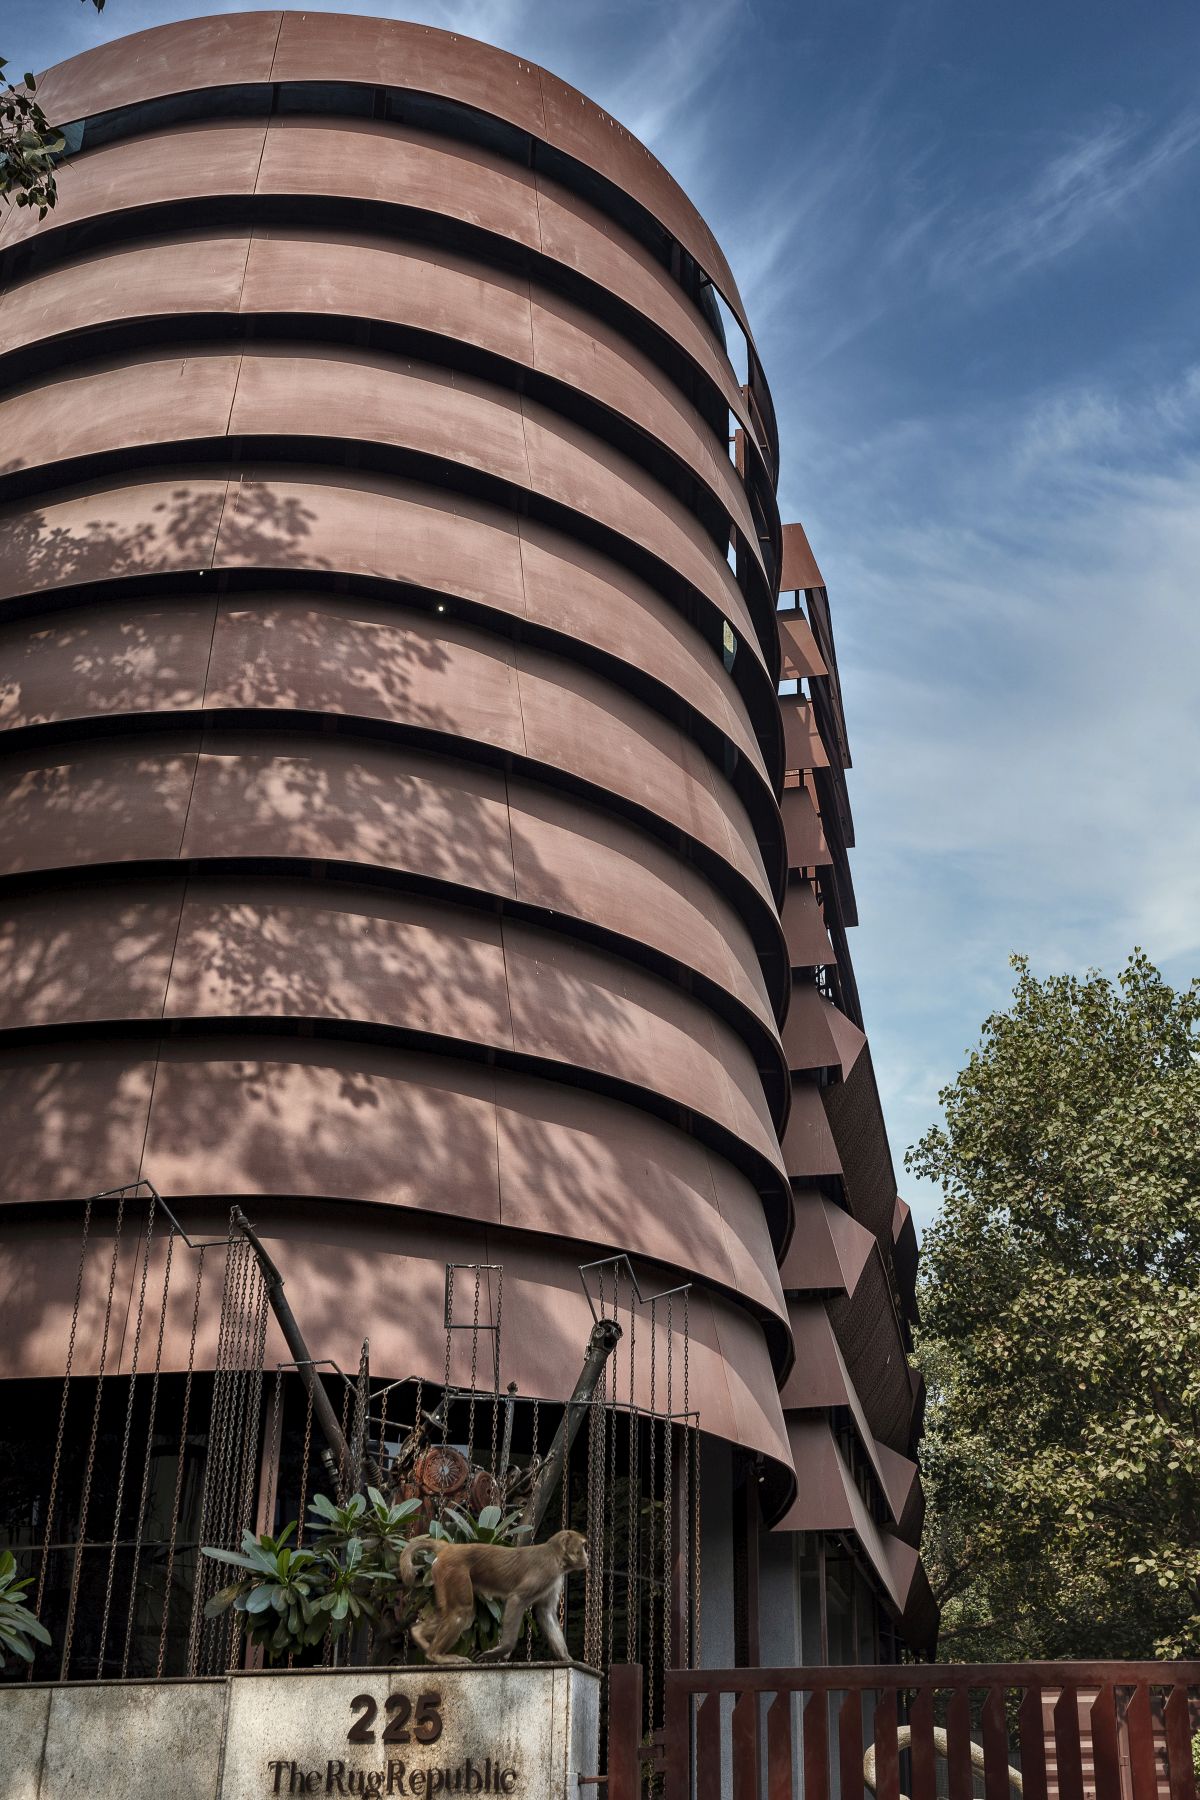 Rug Republic Headquarters, at Okhla, New Delhi, by Architecture Discipline 103